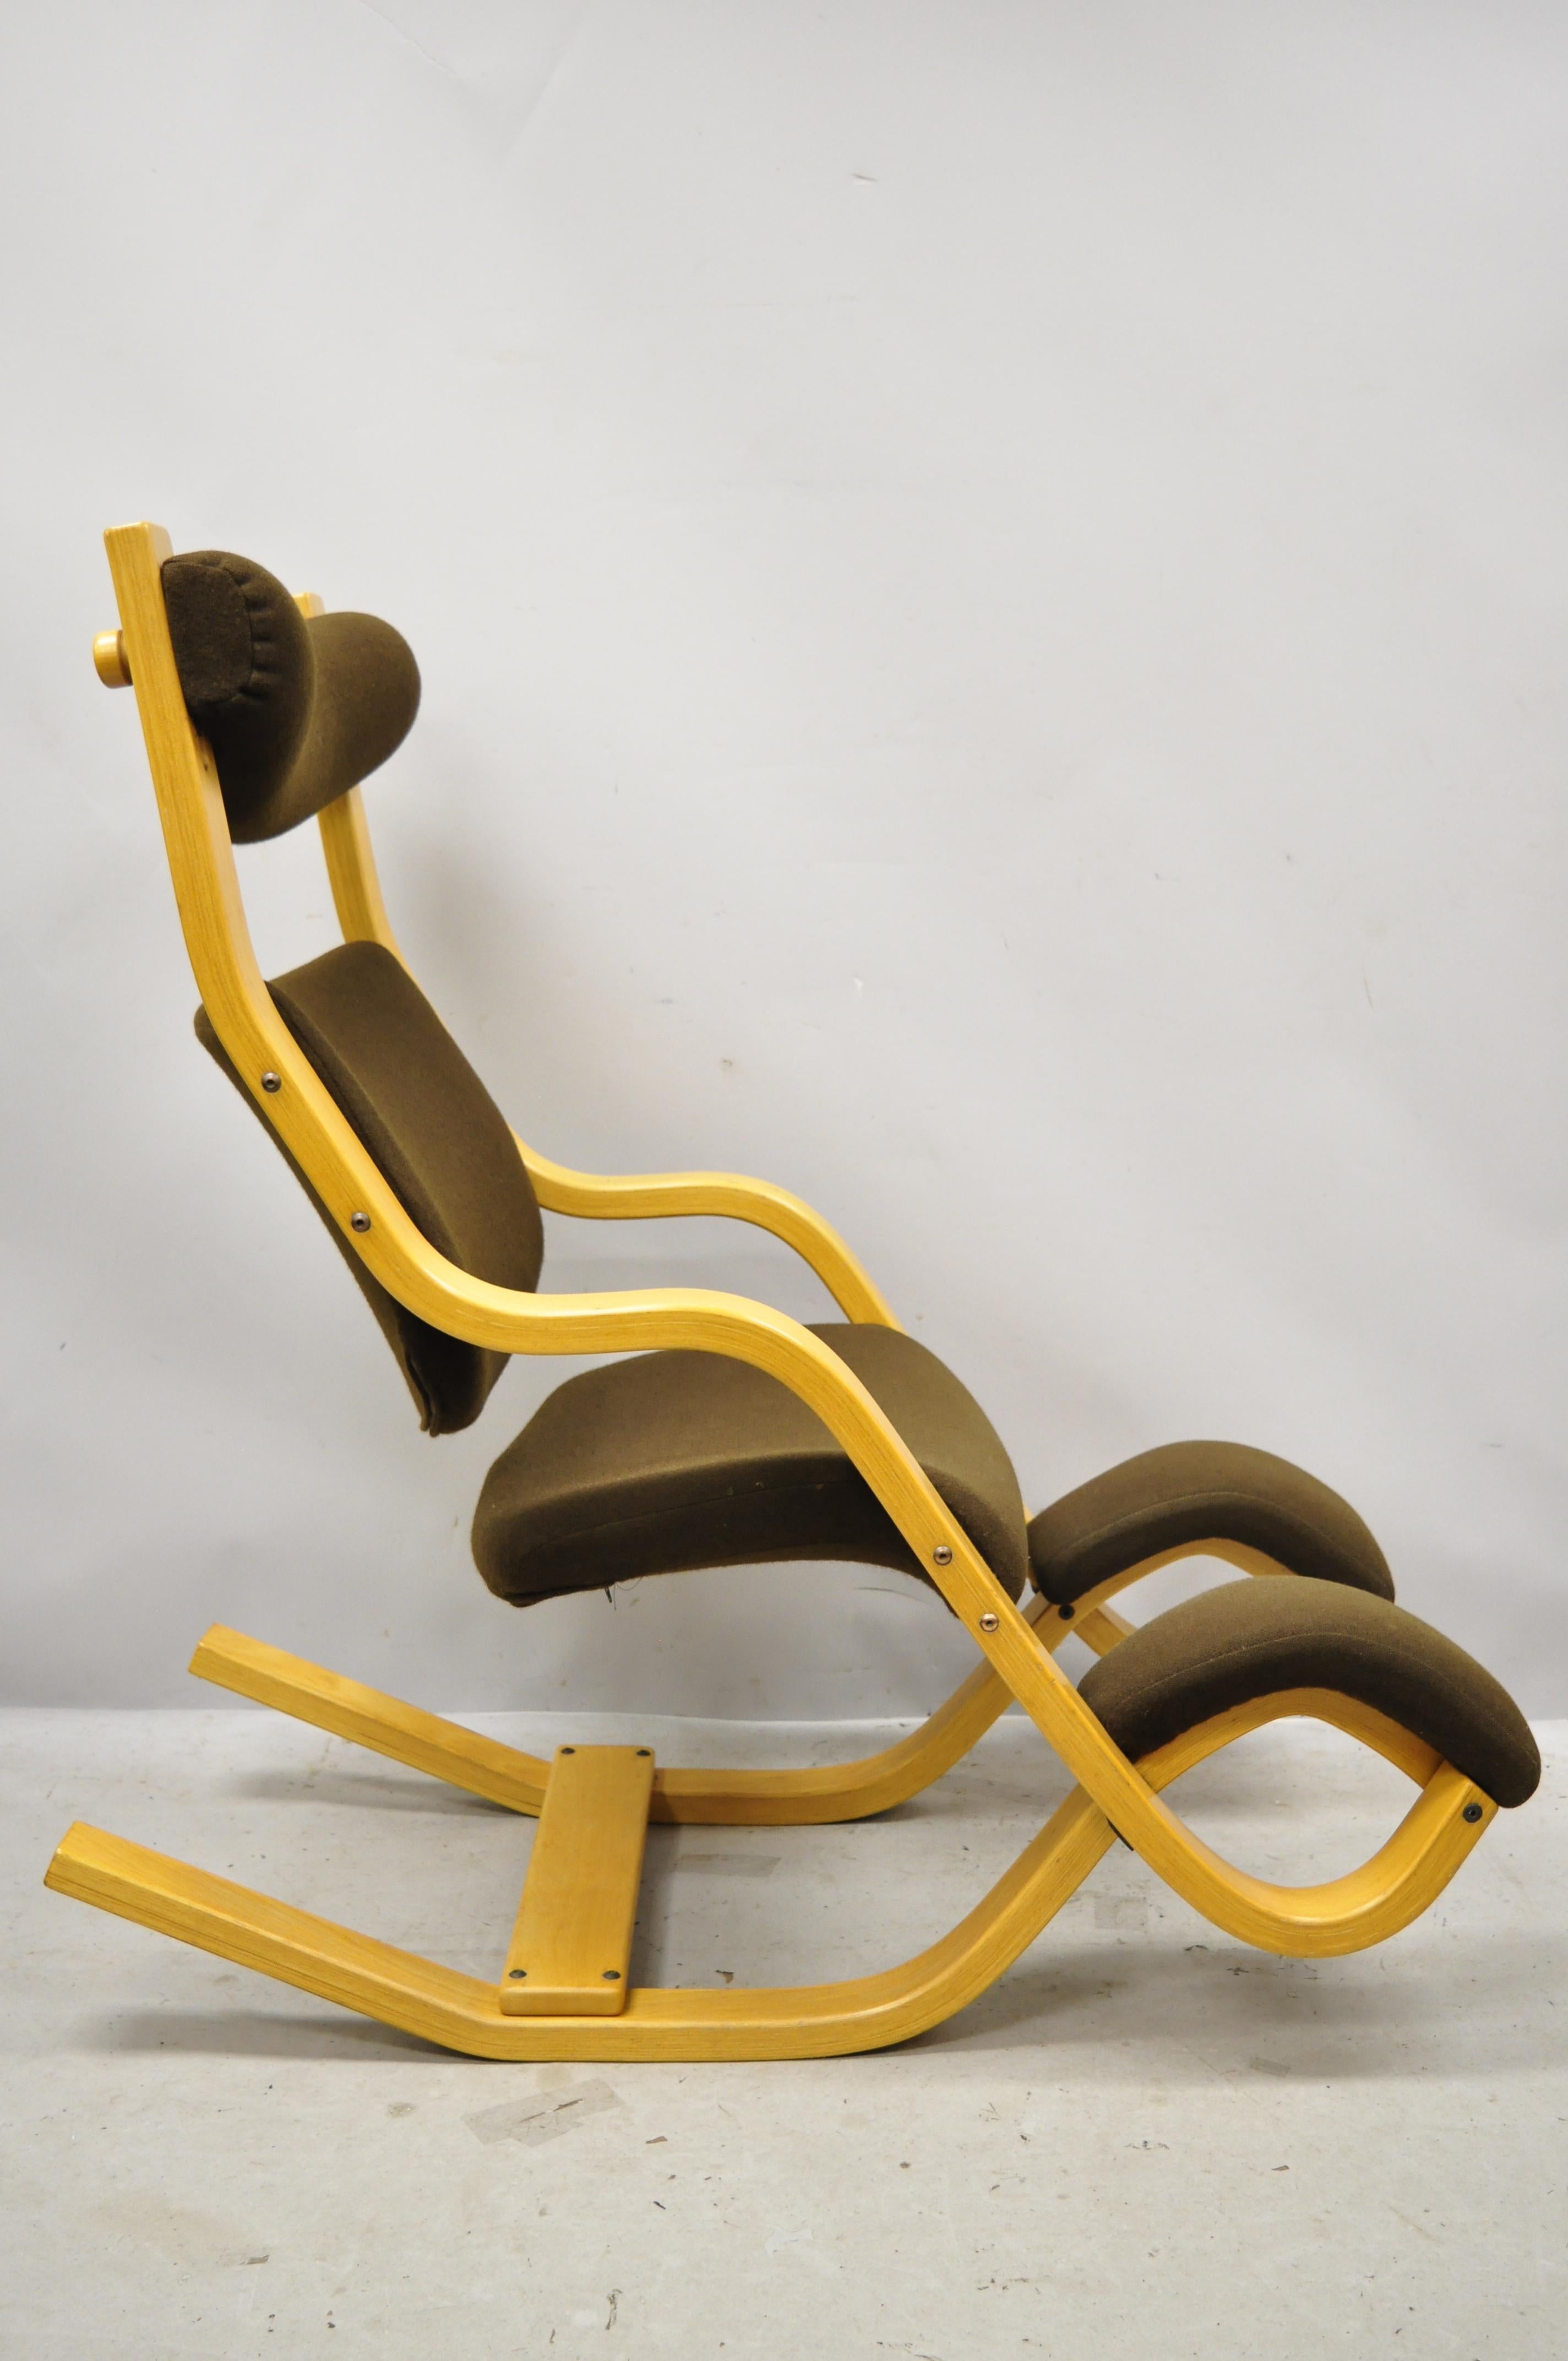 Vintage 1980s Stokke Varier Zero Gravity Balance Balans bentwood lounge chair. Item features adjustable headrest, bentwood frame, brown fabric, very nice vintage item, sleek sculptural form, circa mid-late 20th century. Measurements: 47